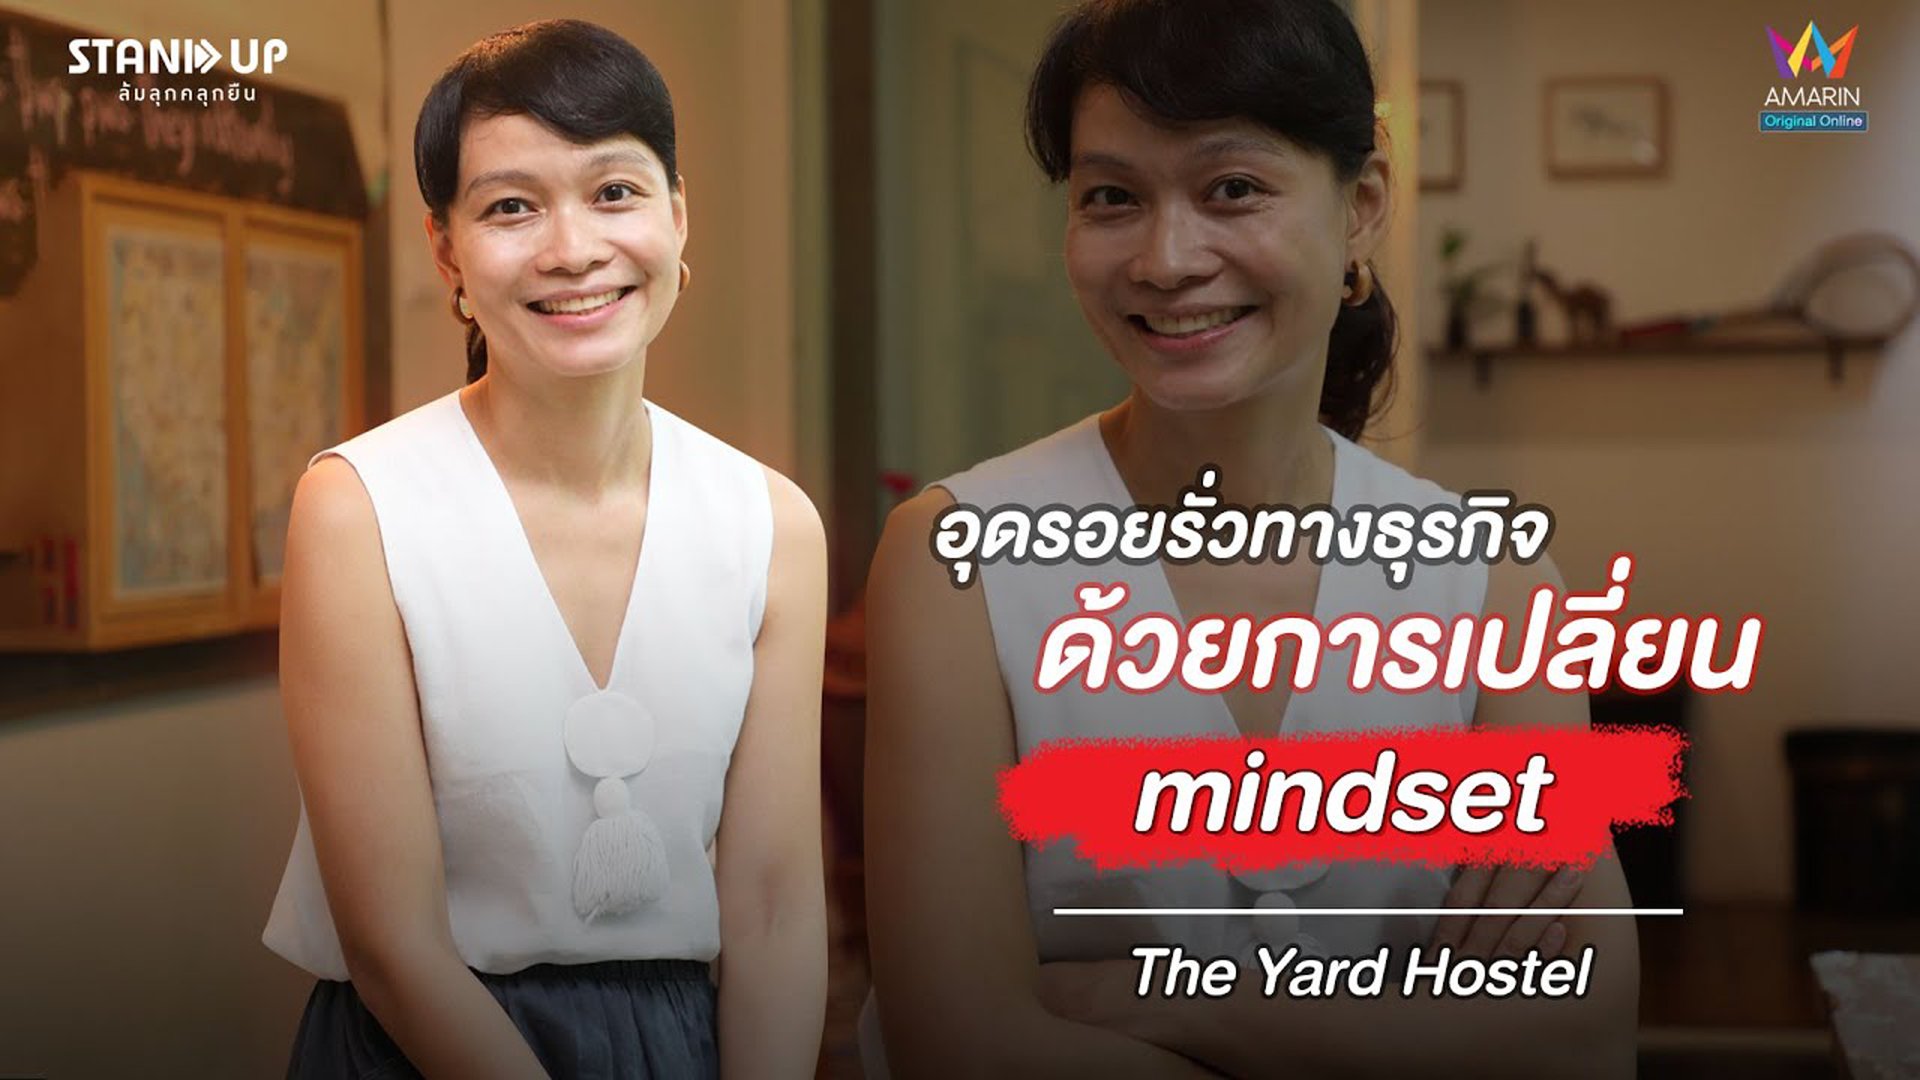 The Yard Hostel อุดรอยรั่วทางธุรกิจ ด้วยการเปลี่ยน mindset | Stand Up ล้มลุกคลุกยืน | 10 มิ.ย. 64 | AMARIN TVHD34